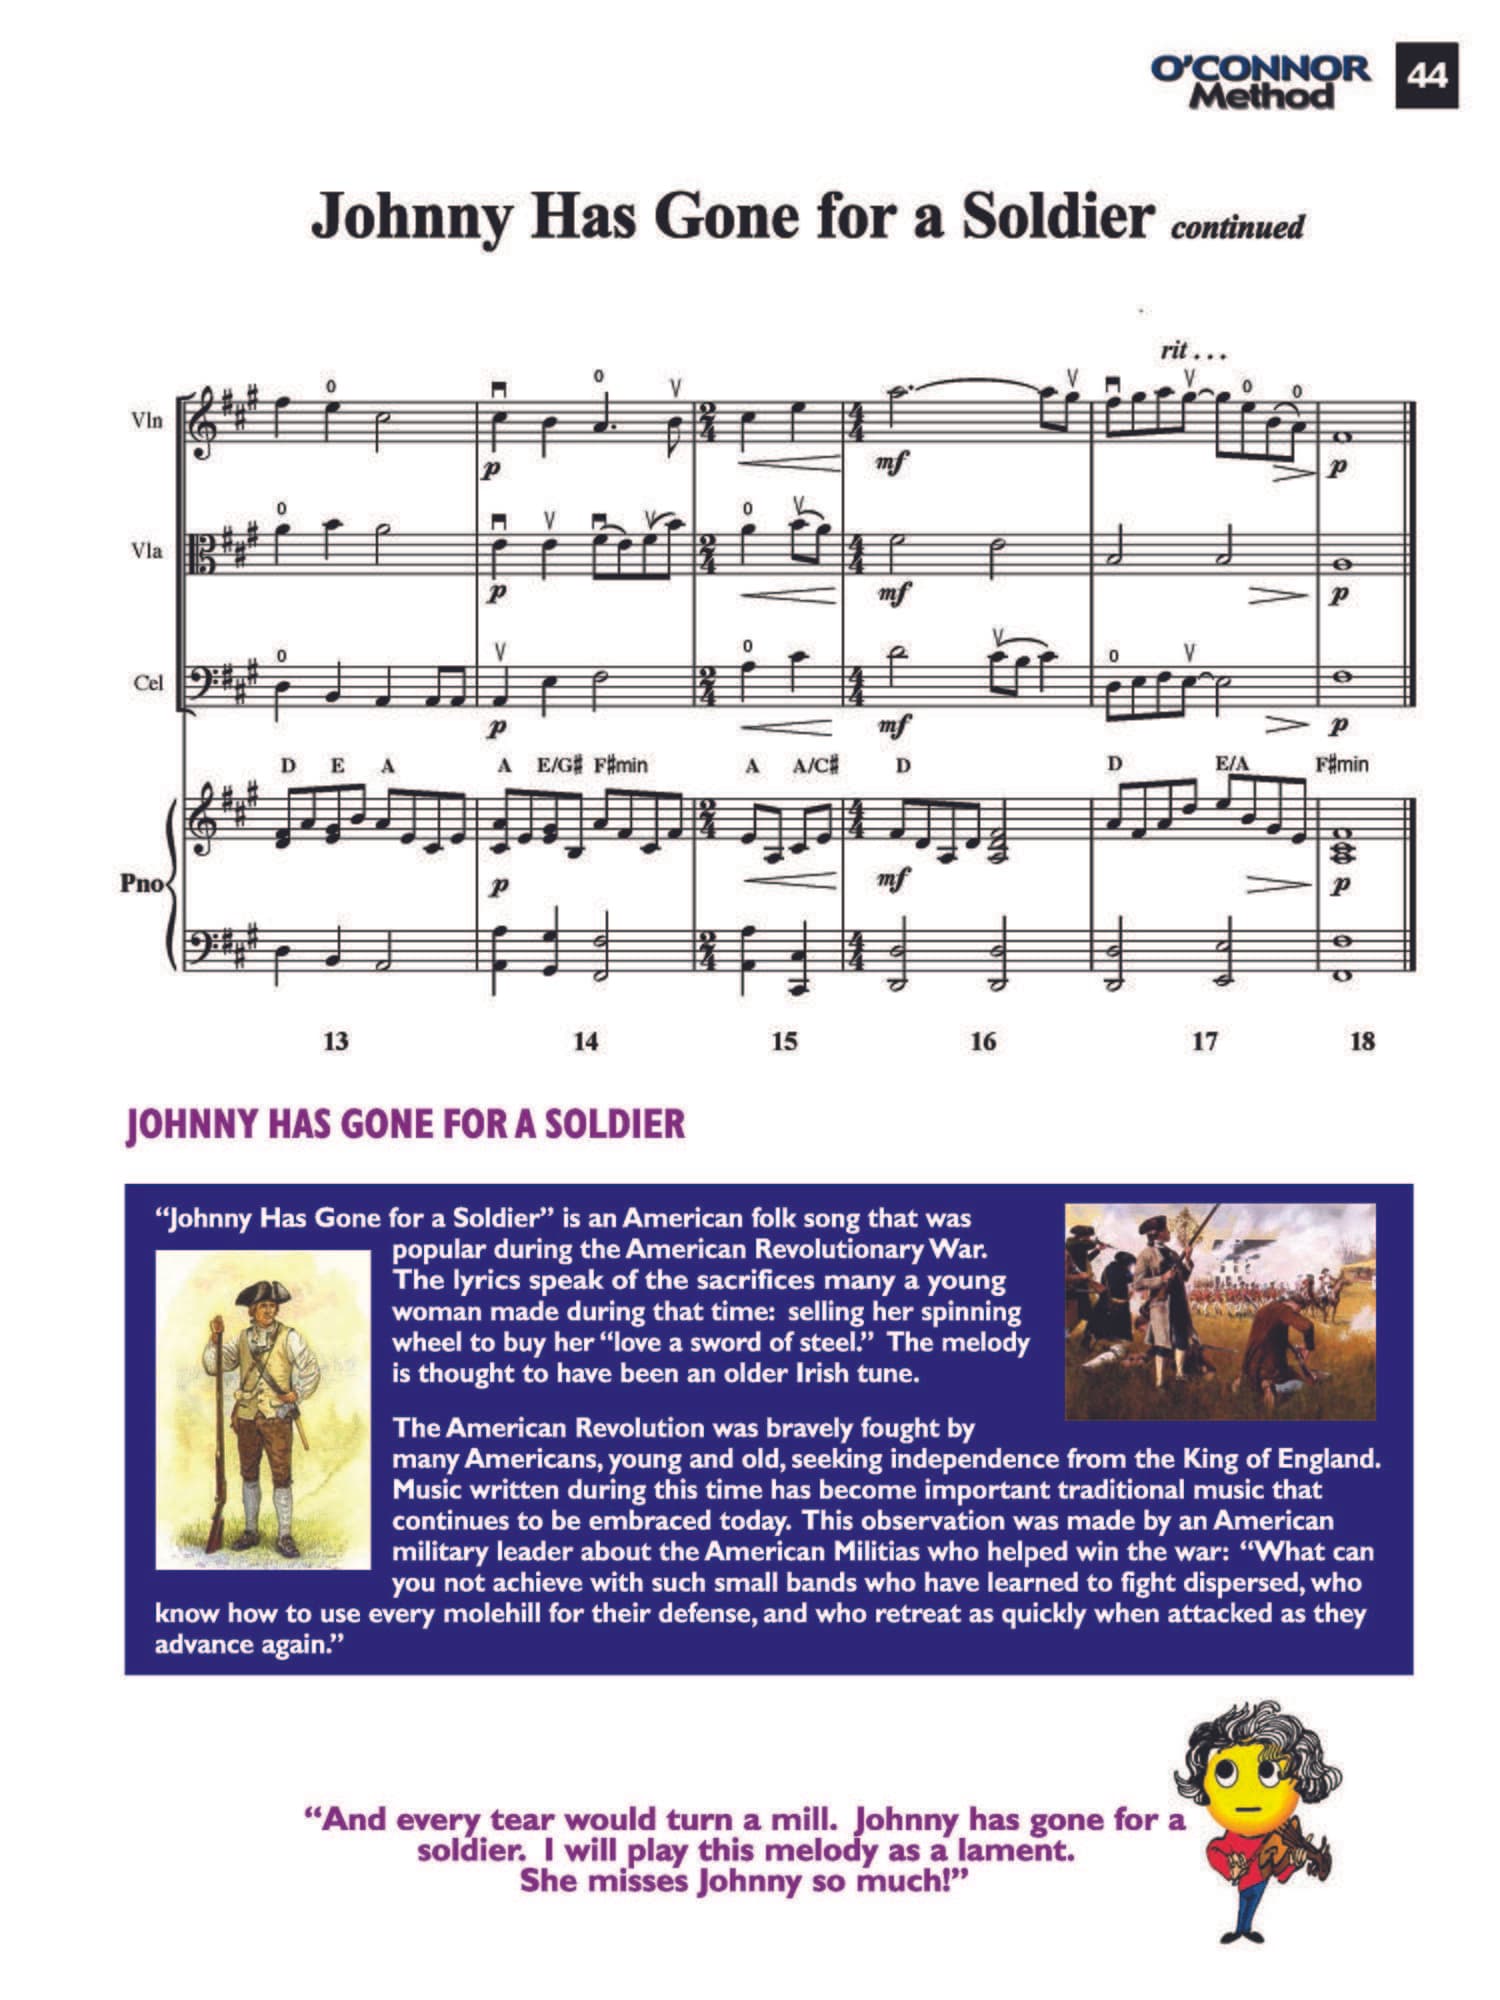 O'Connor Method for Orchestra Book I - Score - Digital Download